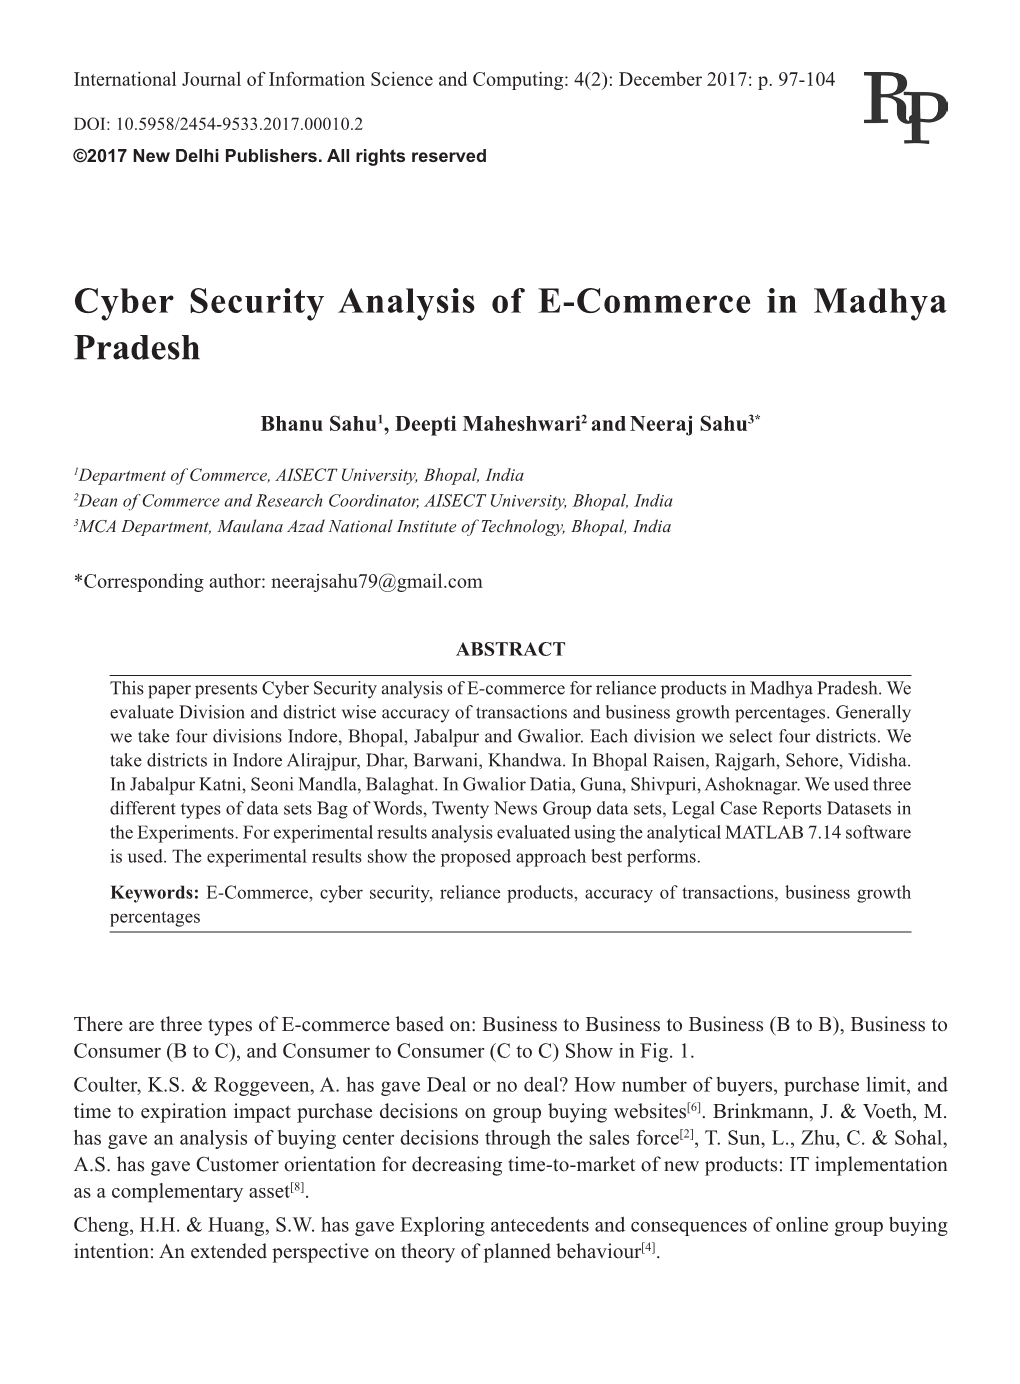 Cyber Security Analysis of E-Commerce in Madhya Pradesh